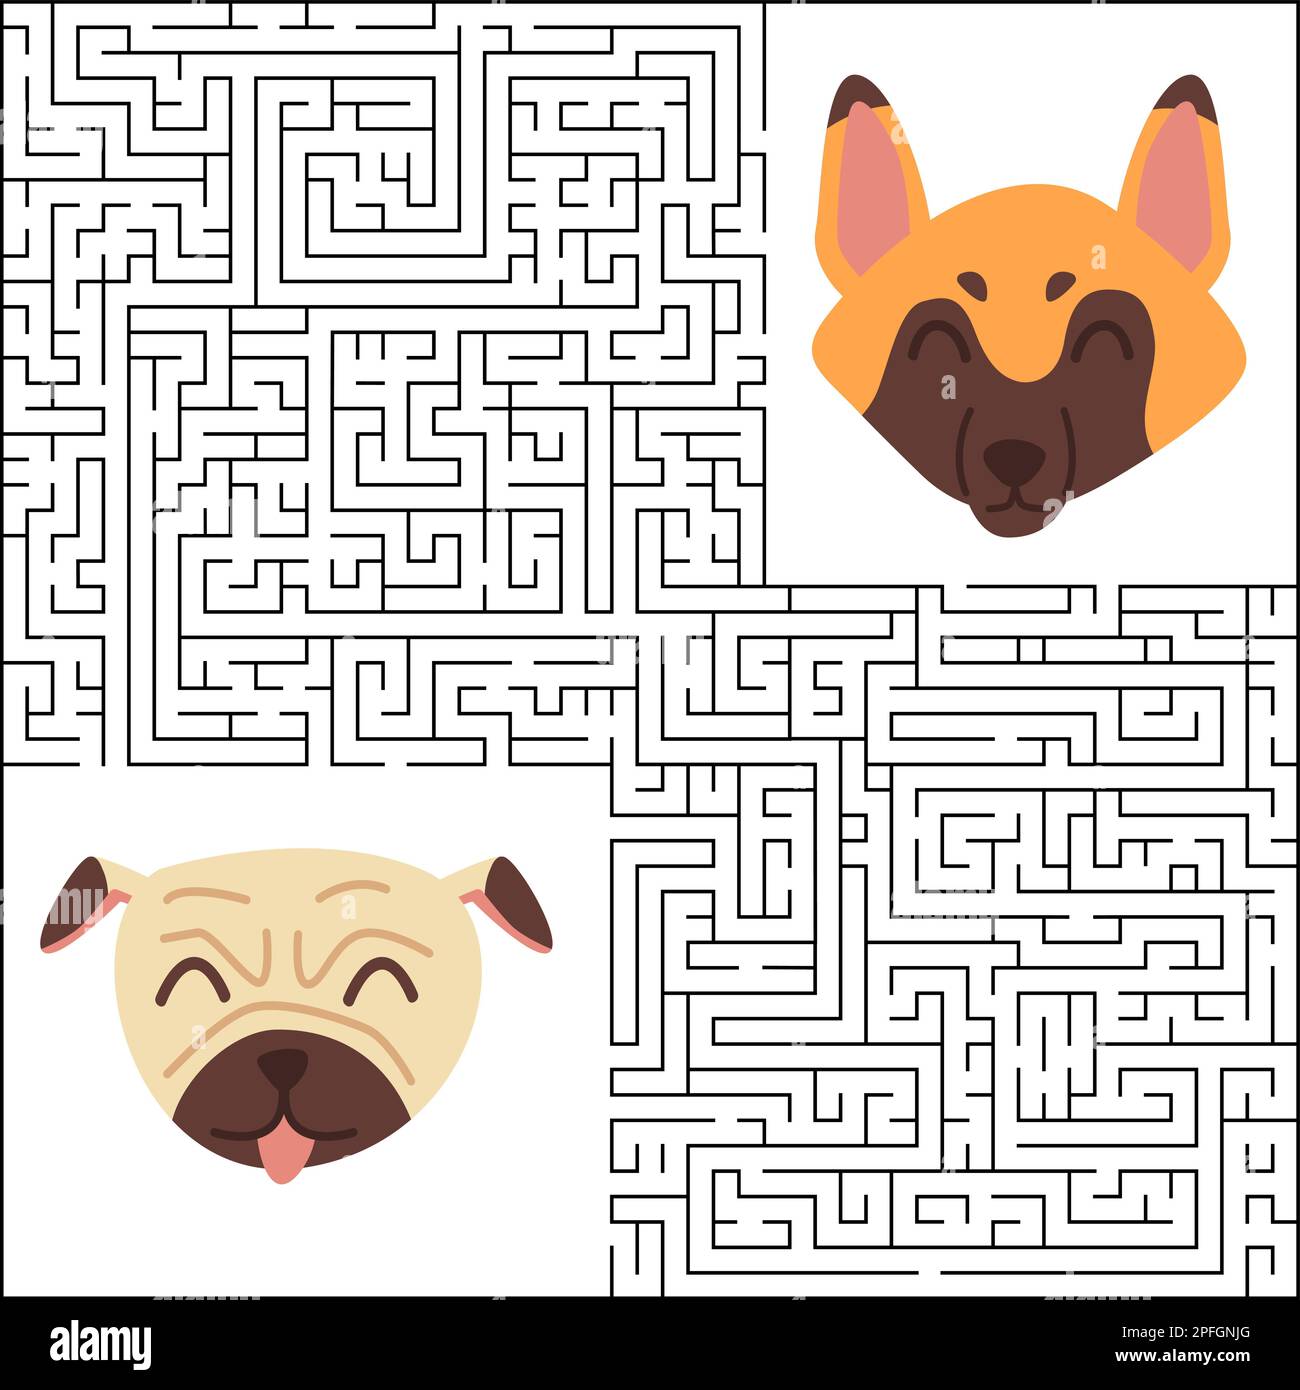 https://c8.alamy.com/comp/2PFGNJG/kids-maze-game-help-german-shepherd-dog-find-his-pug-friend-labyrinth-puzzle-design-2PFGNJG.jpg